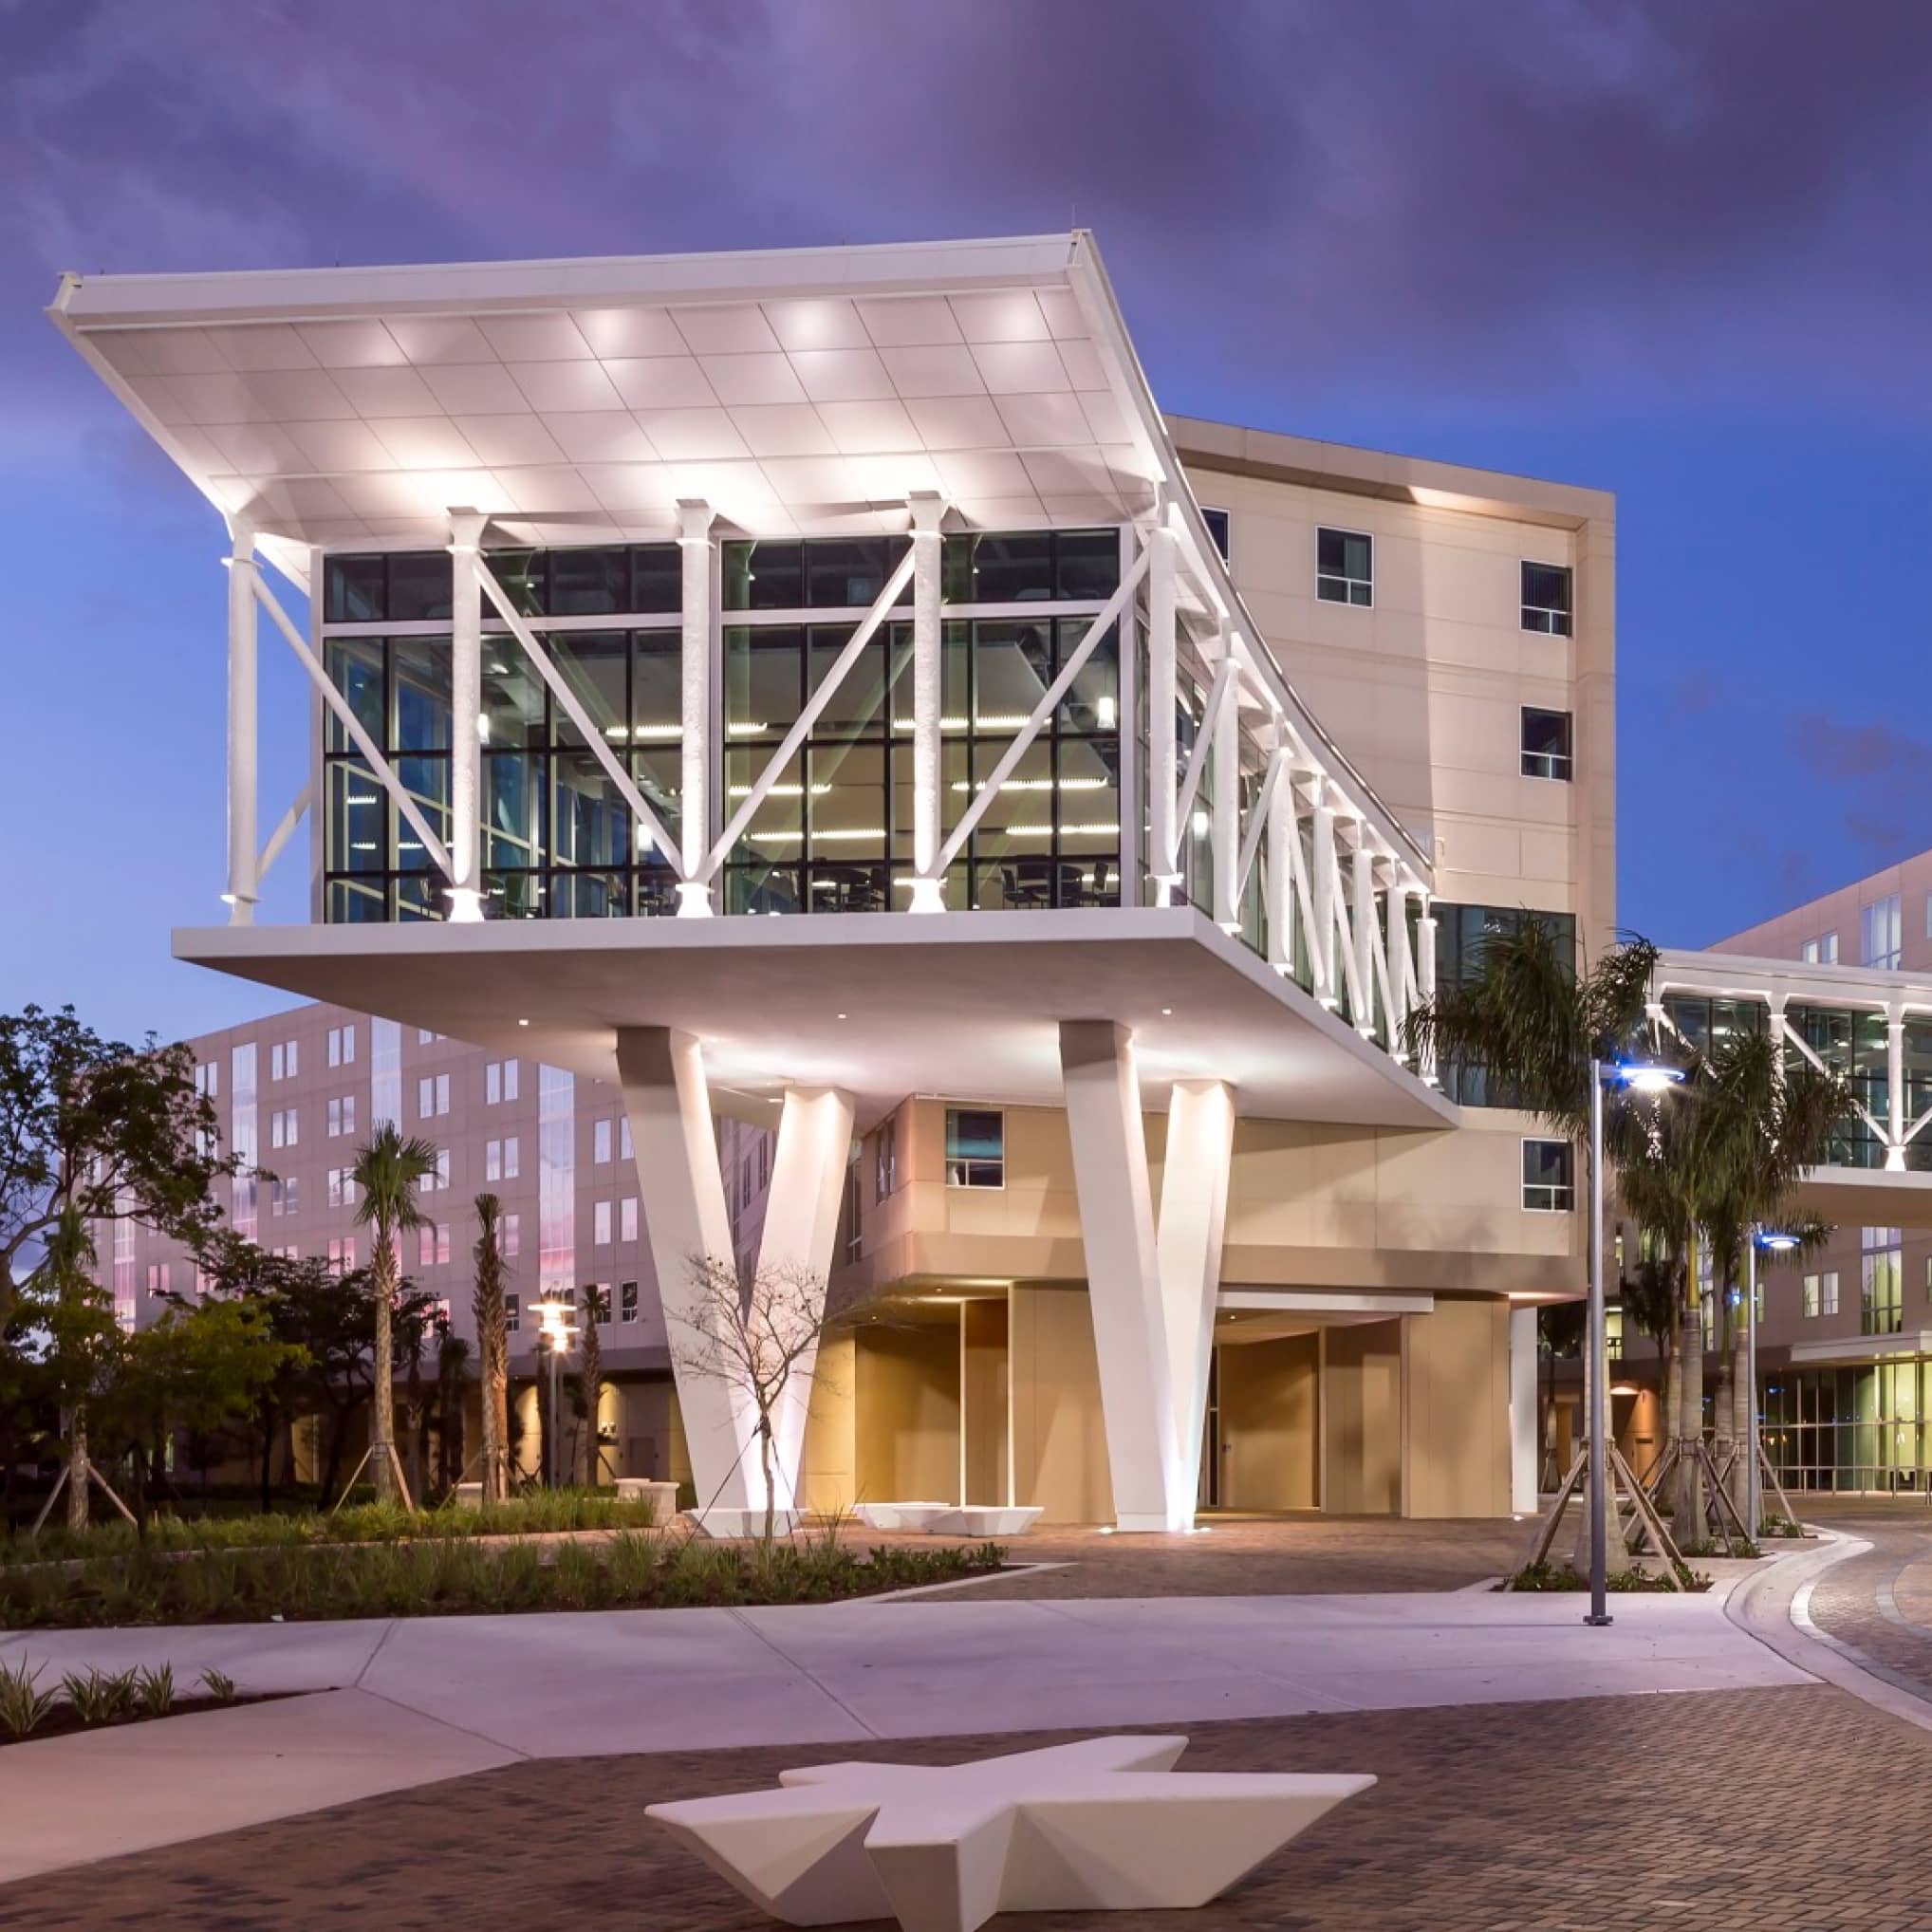 Florida International University Parkview Housing & Recreation Center